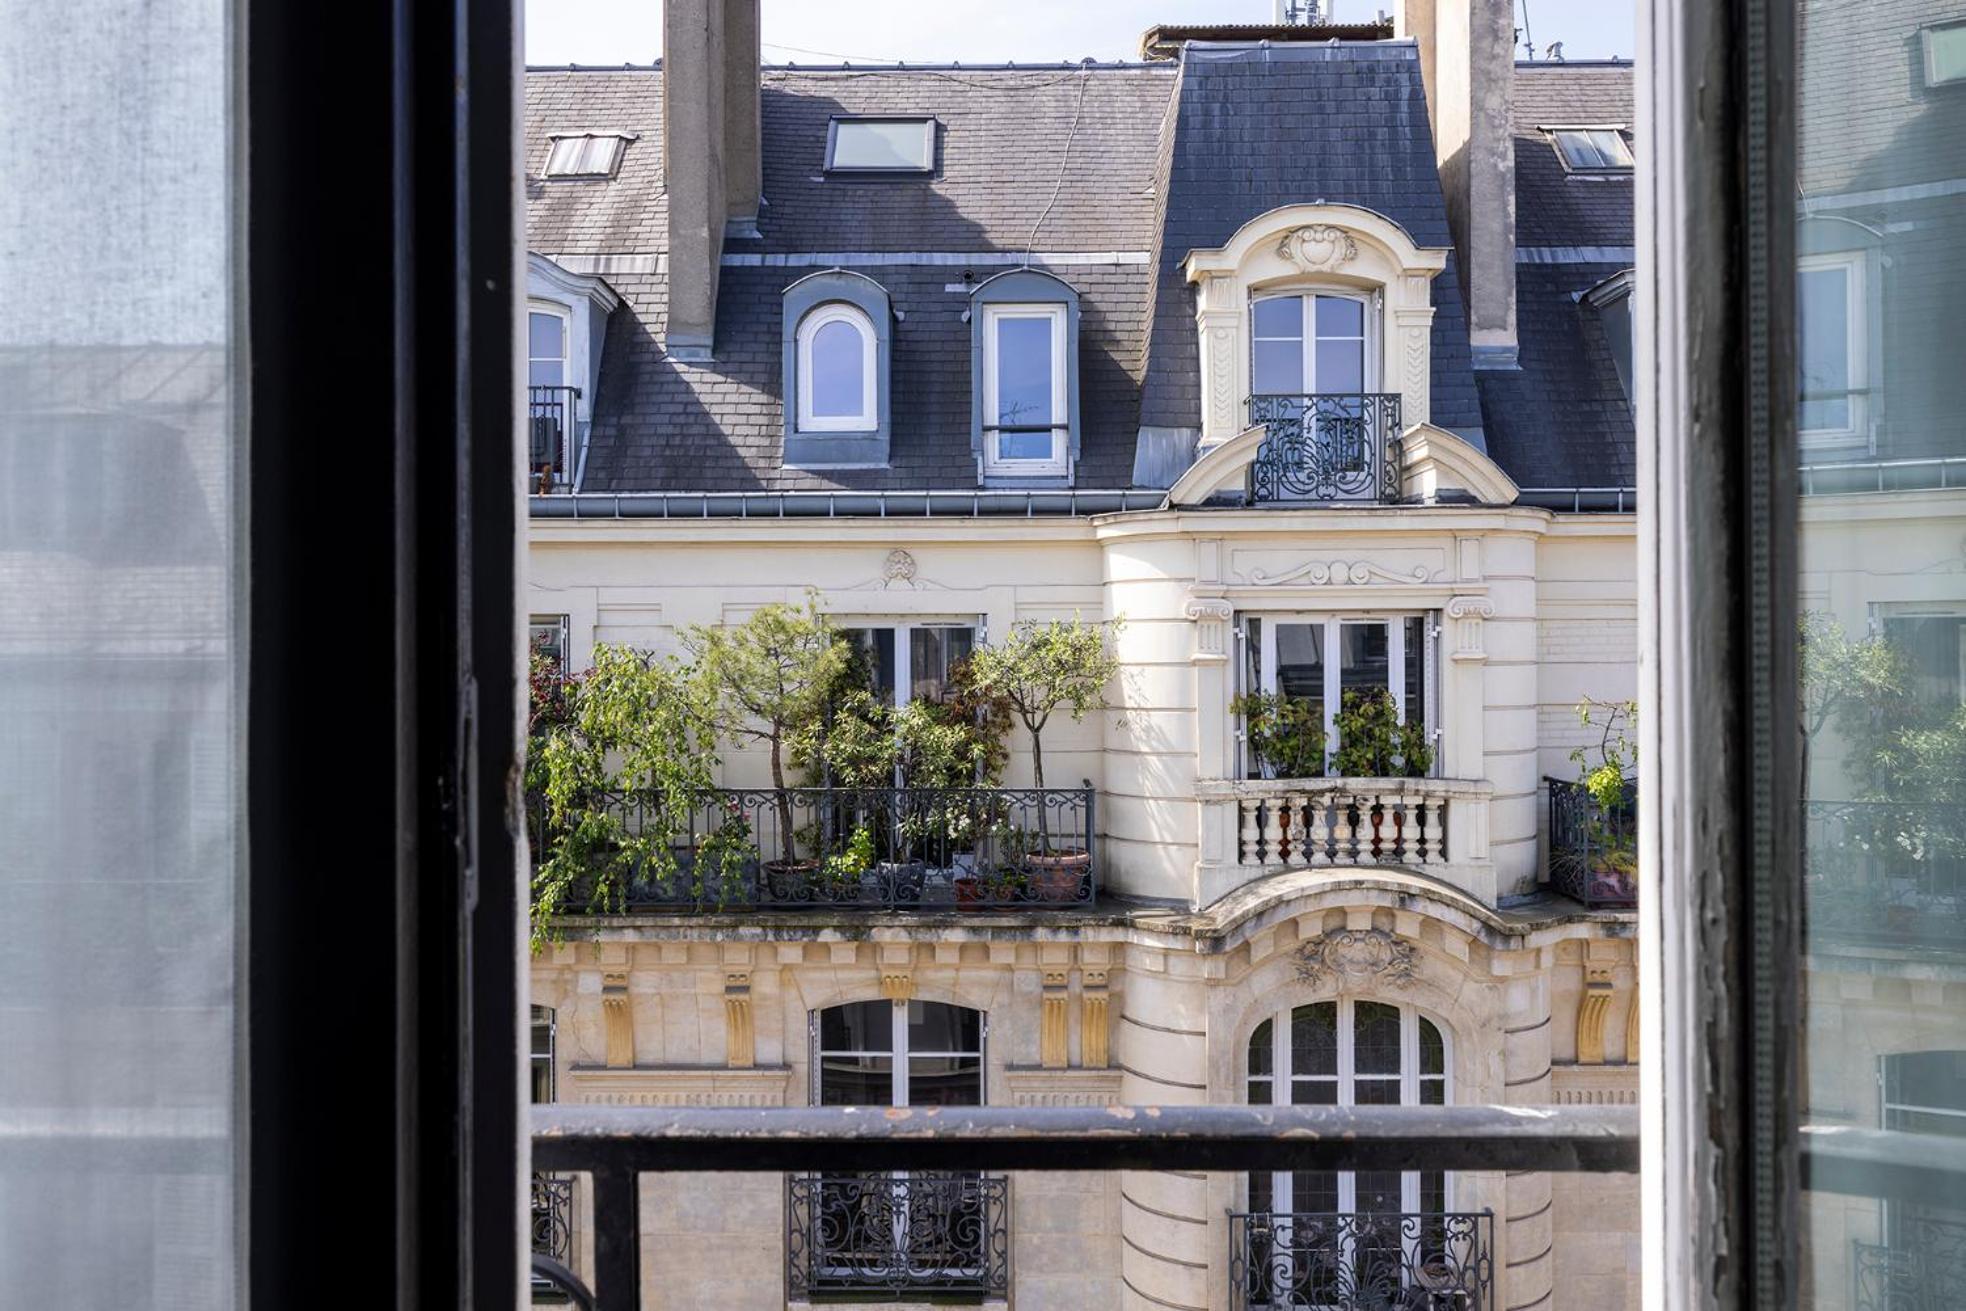 Avalon Cosy Hotel פריז מראה חיצוני תמונה